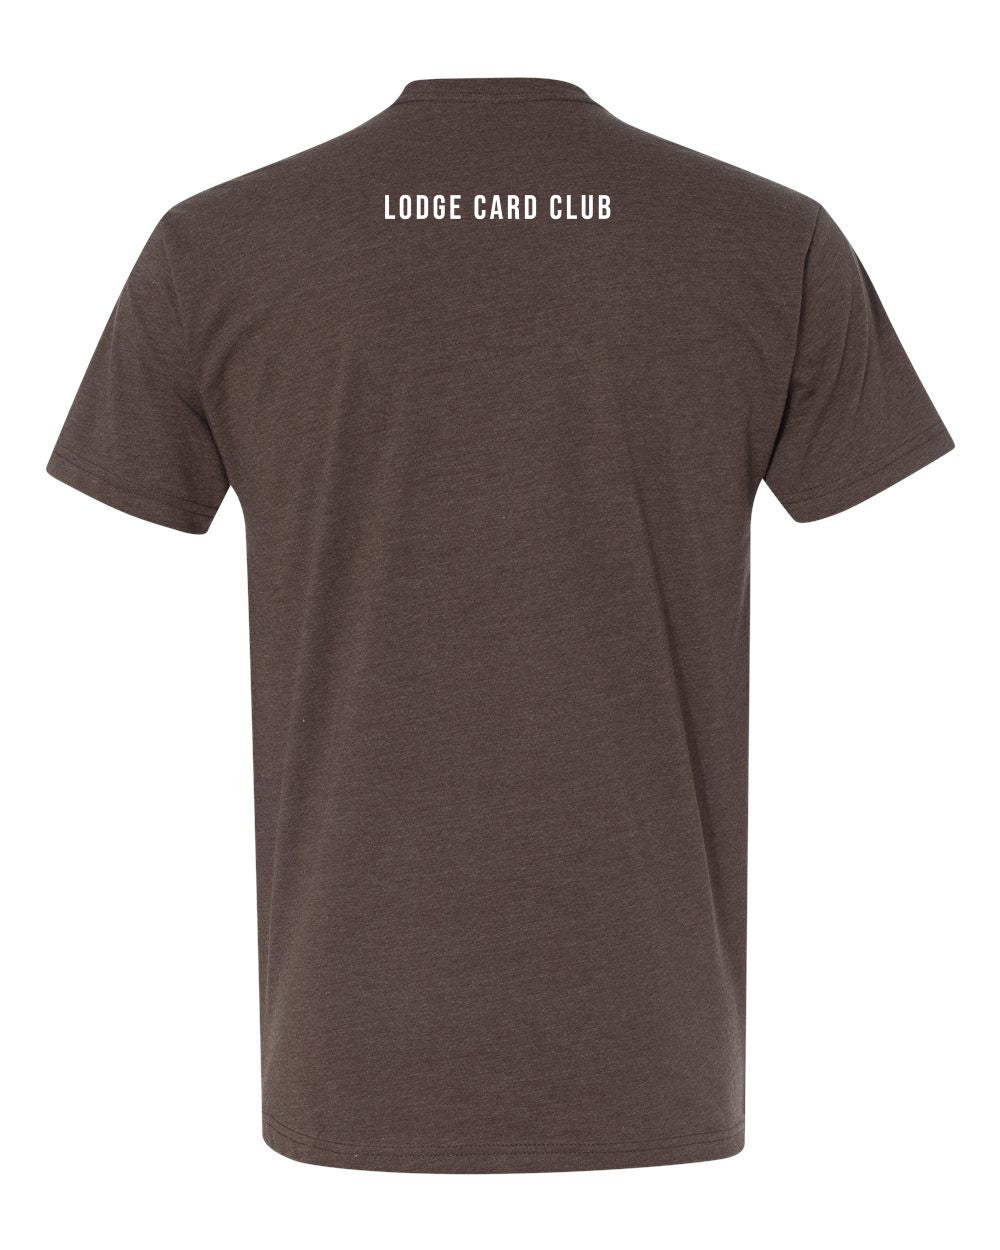 LCC Spade Shirt - Brown